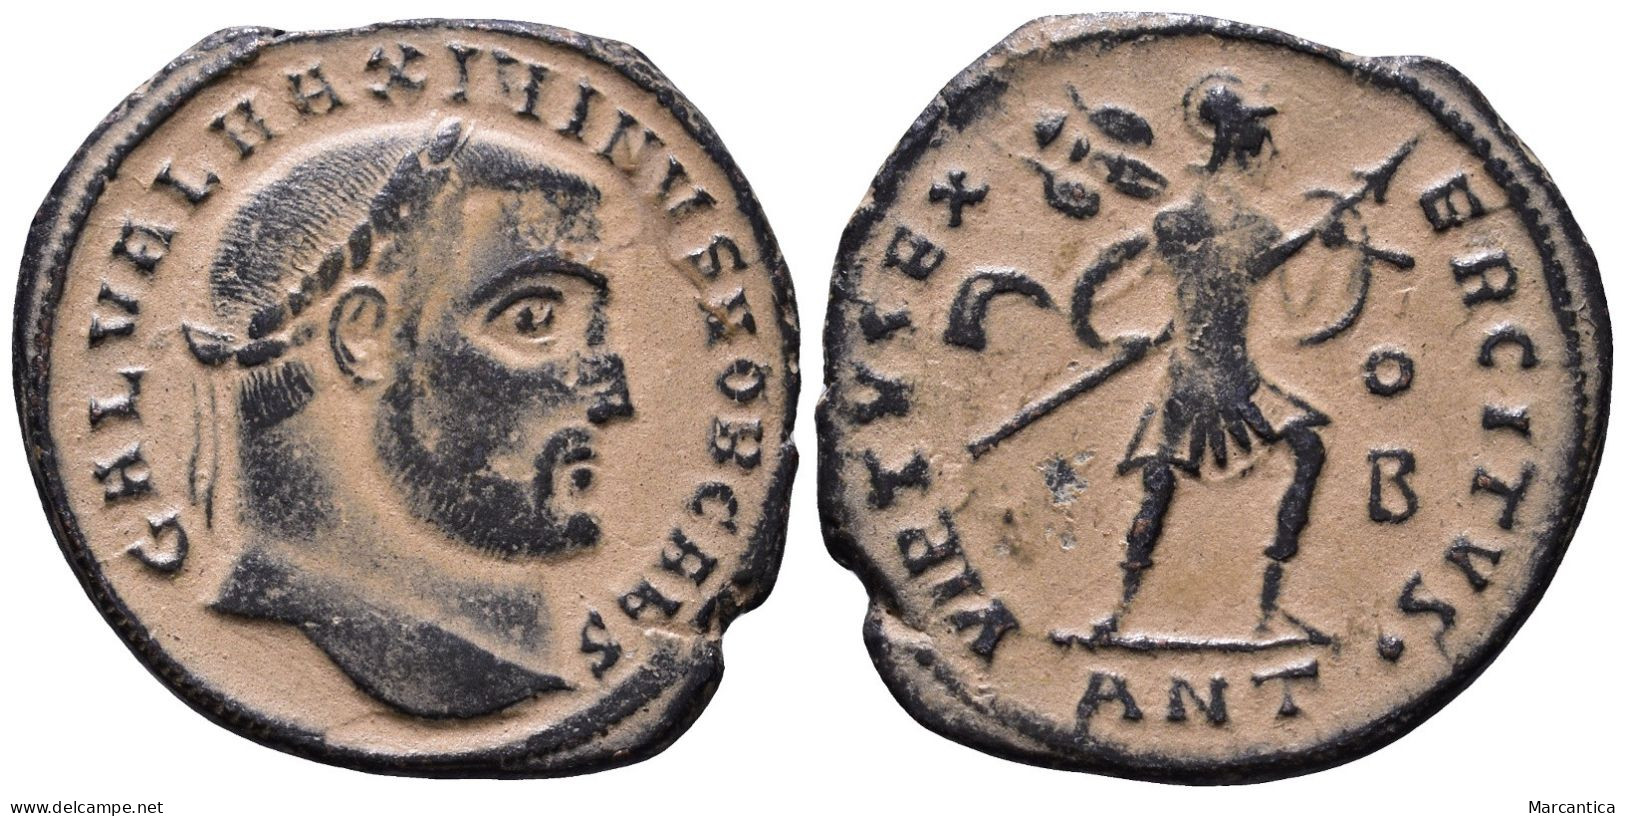 Maximinus II Daia, Caesar (305-313 AD). Antioch AE Follis (24 Mm 4,65 G) - The Christian Empire (307 AD To 363 AD)